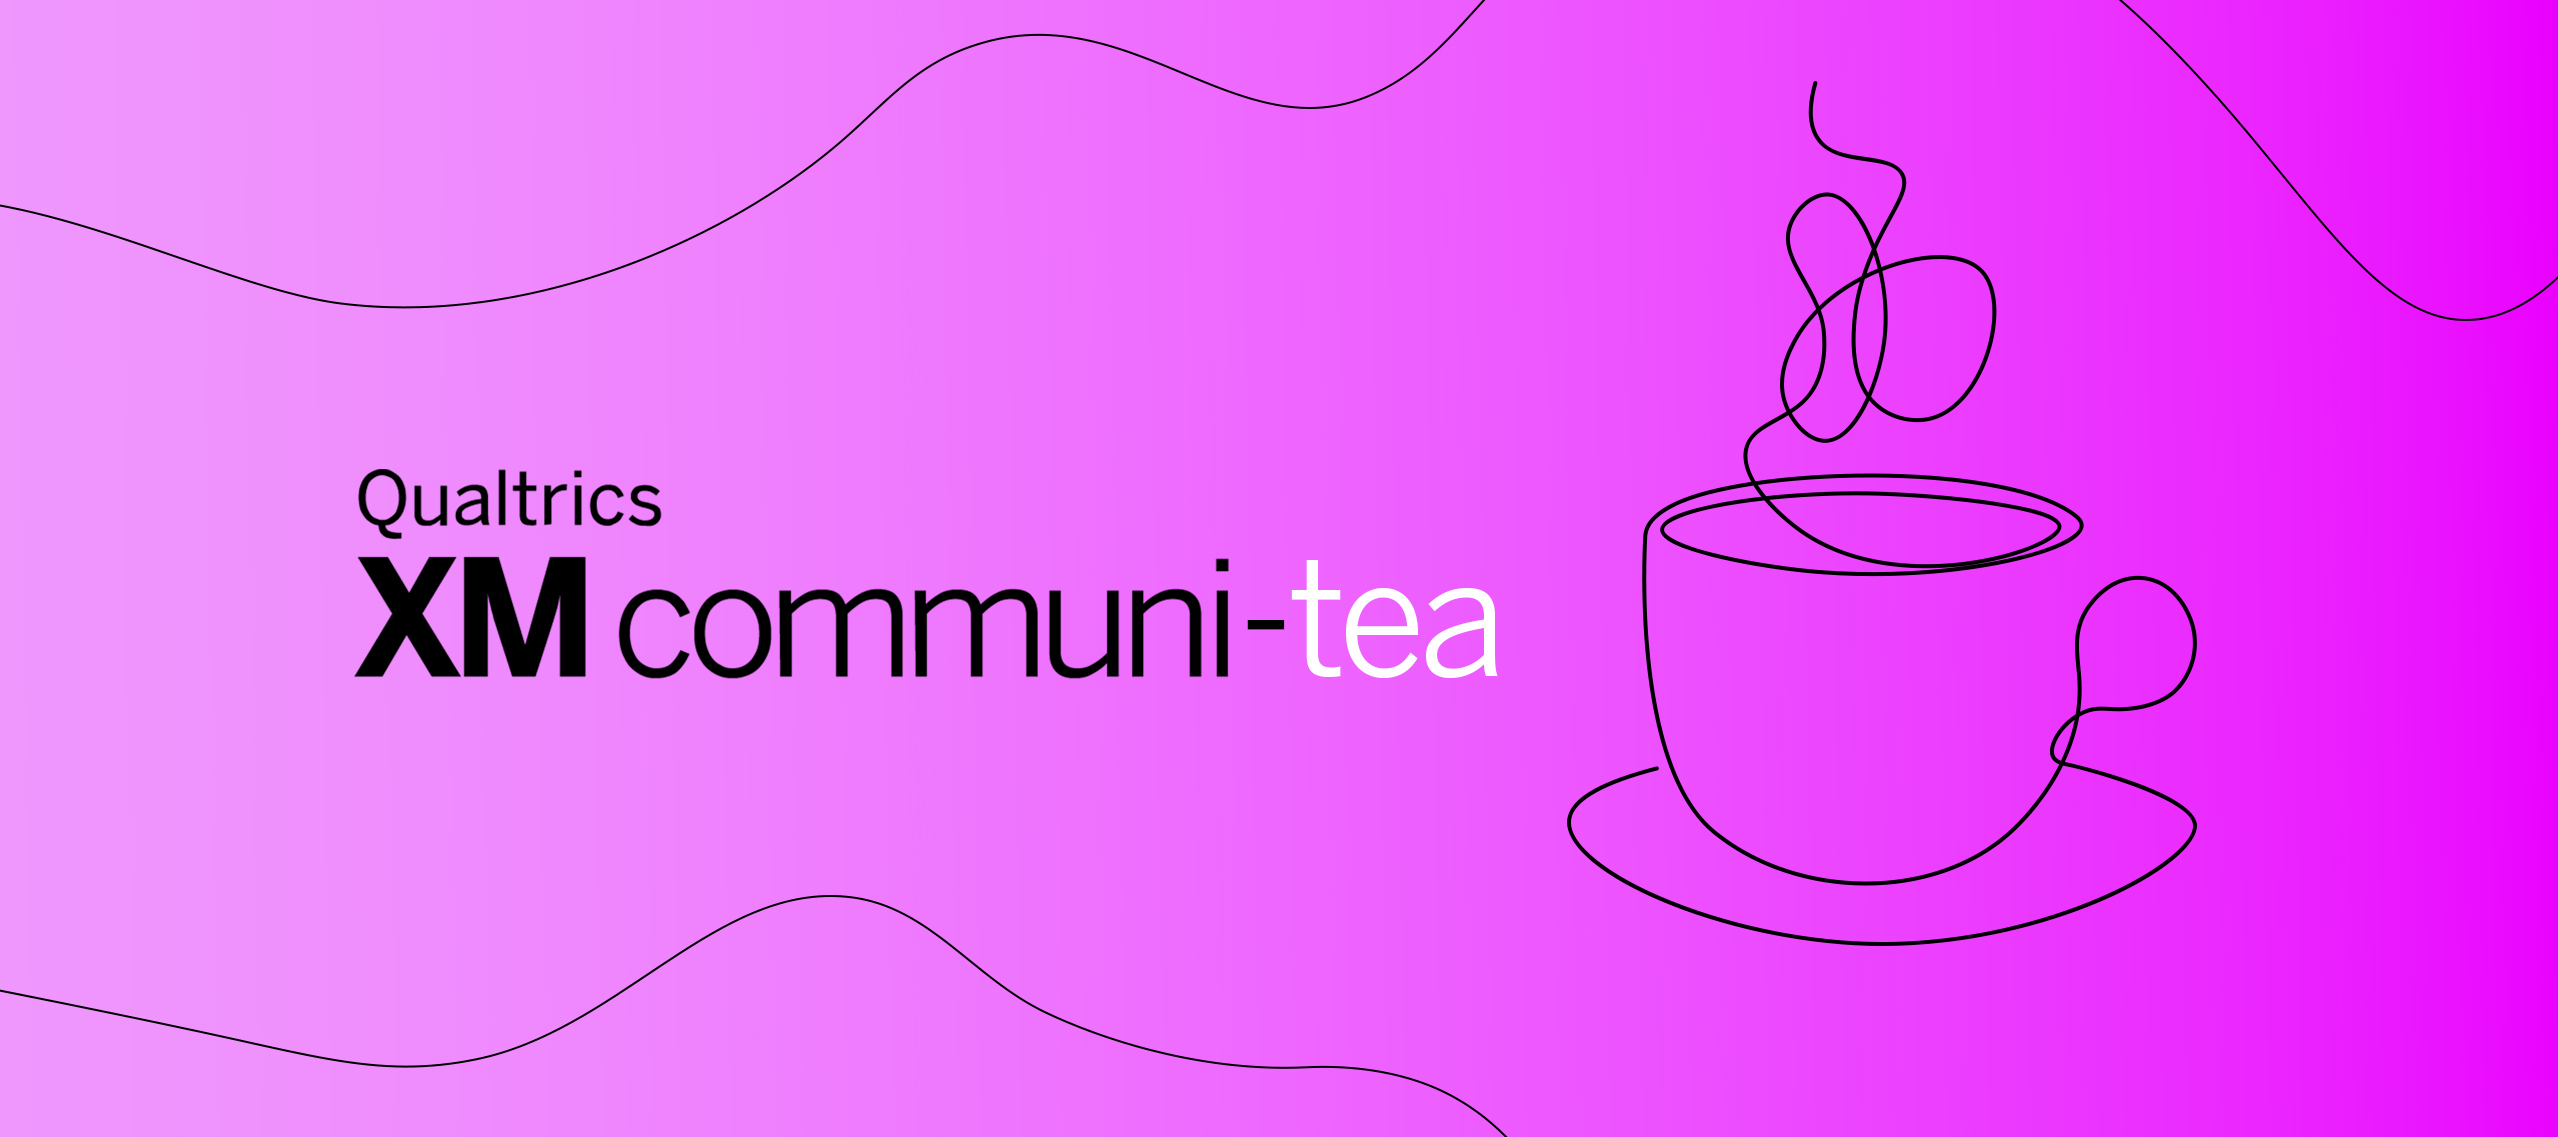 XM Communi-tea Podcast: Natalie Maxwell, Qualtrics Technical Program Manager